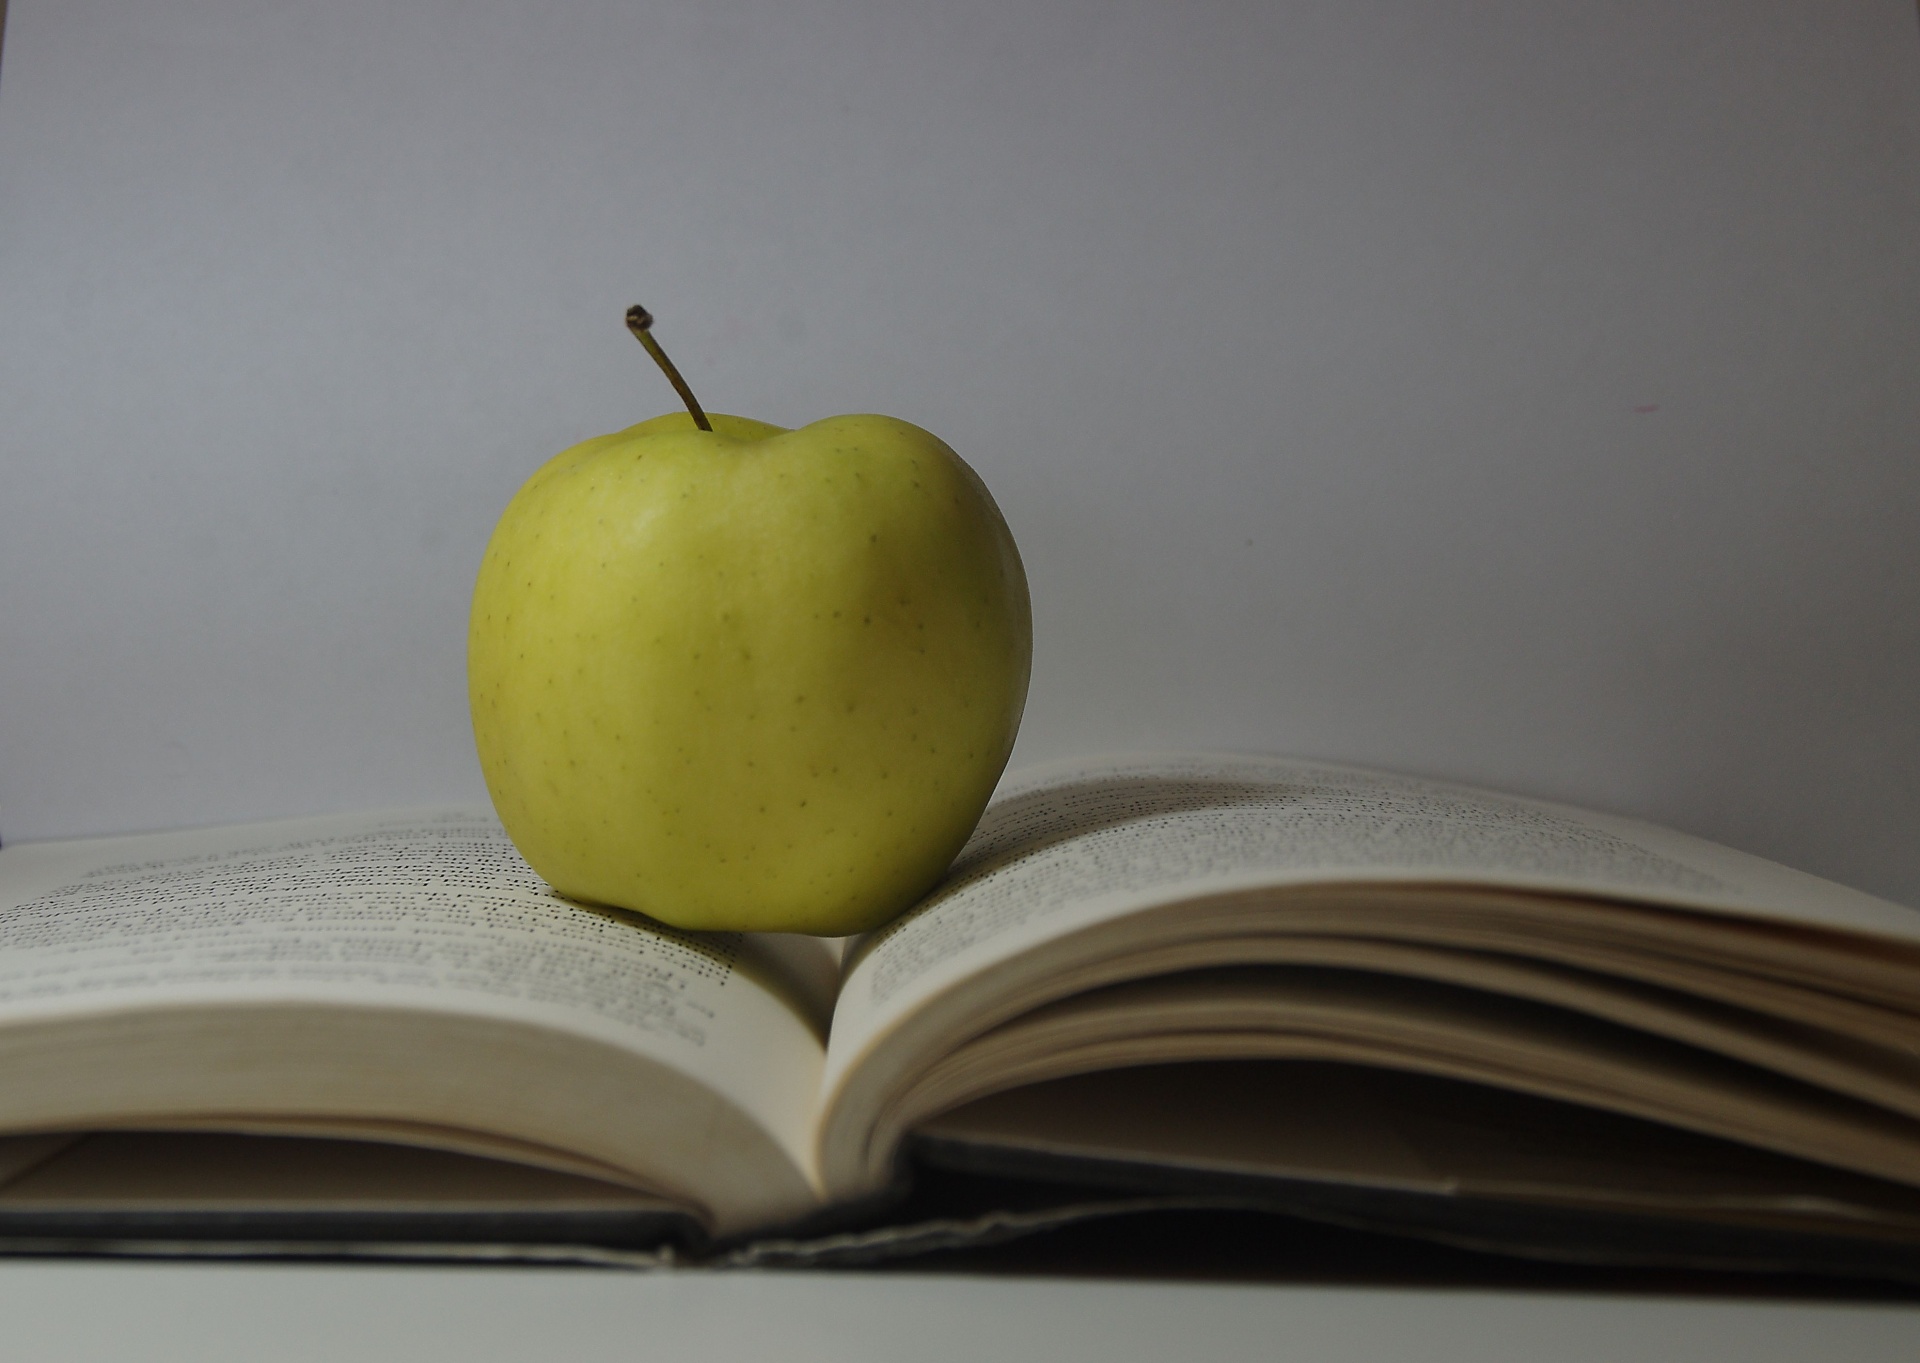 Apple en libro con backgrou gris